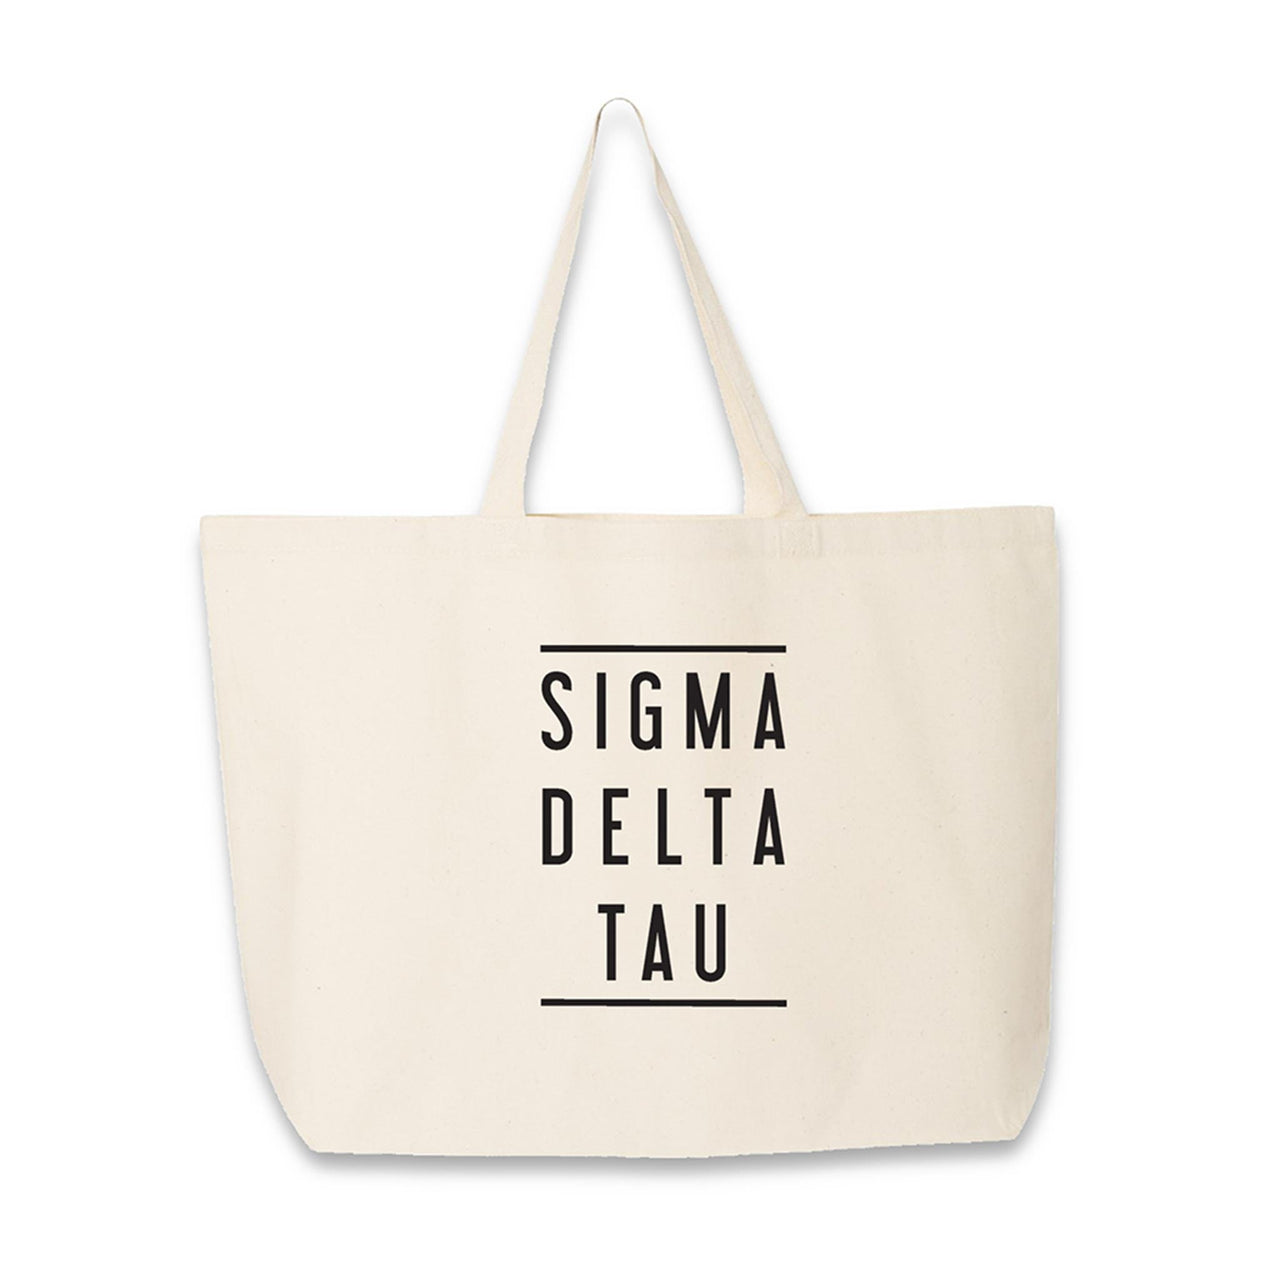 Sigma Delta Tau printed on a natural cotton canvas tote